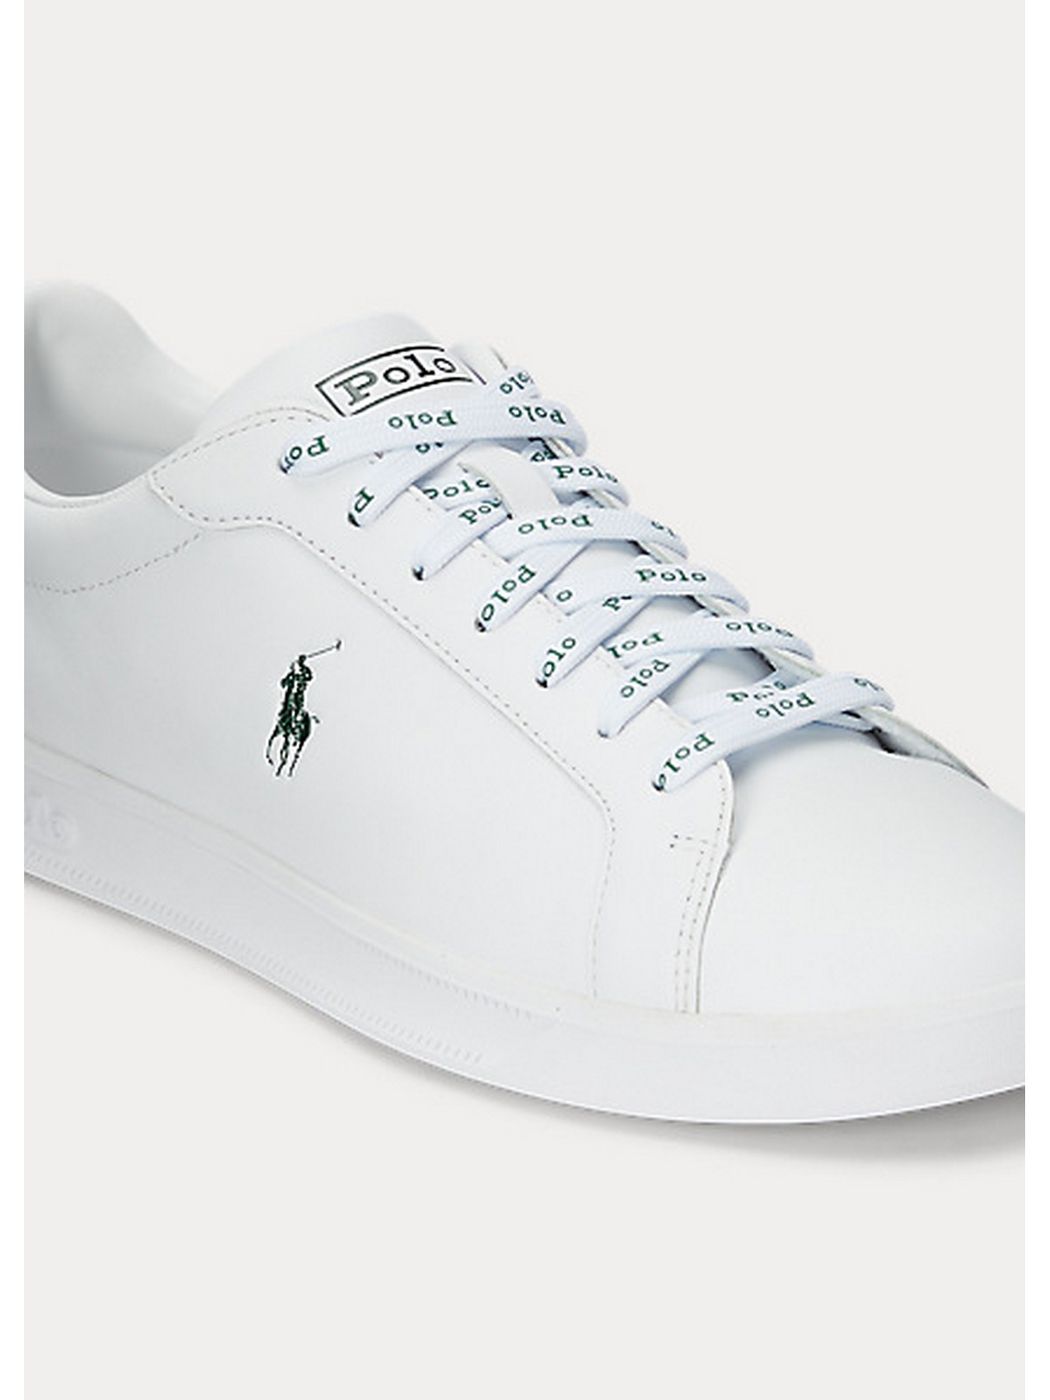 POLO RALPH LAUREN Sneaker Unisex adulto Heritage Court II 809829824 Bianco